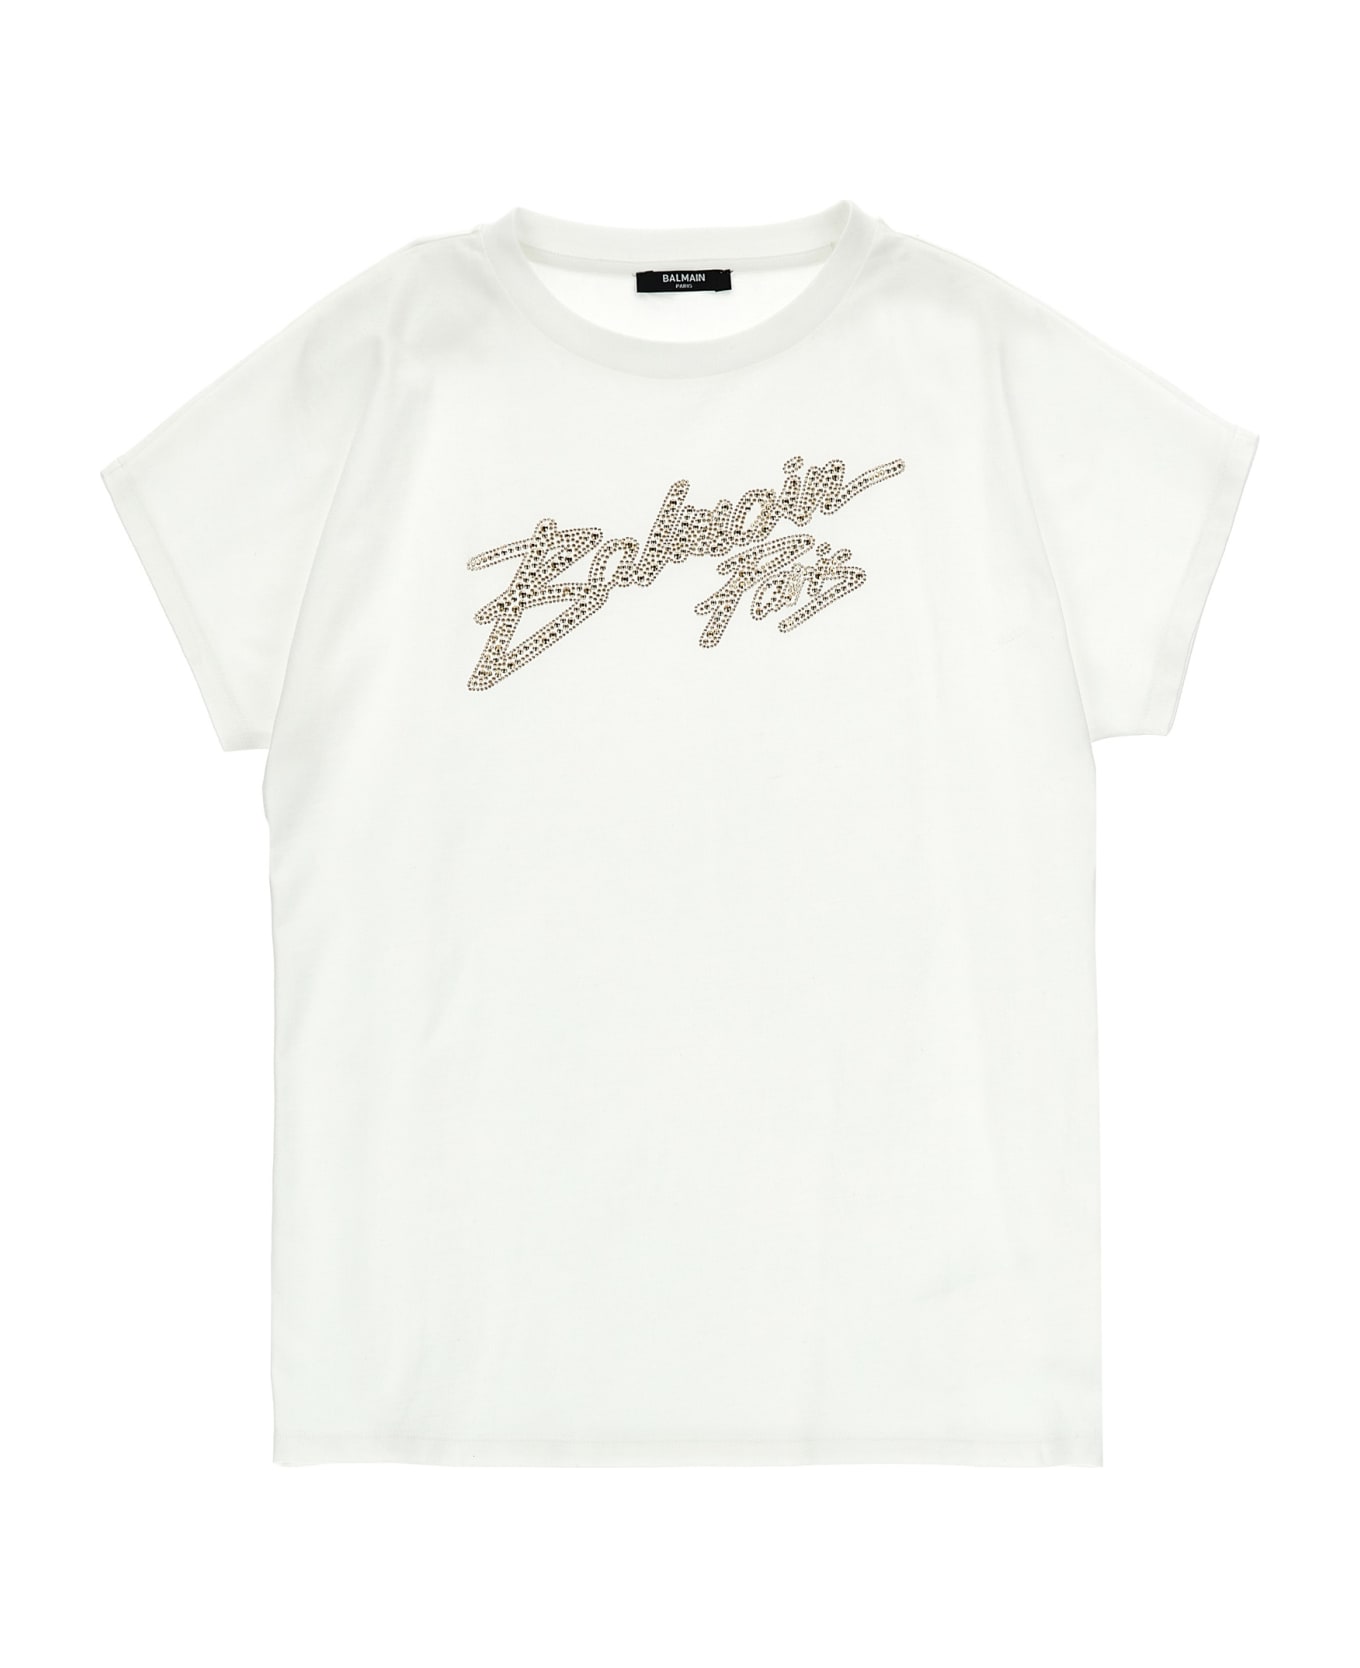 Balmain Rhinestone Logo T-shirt - White/gold